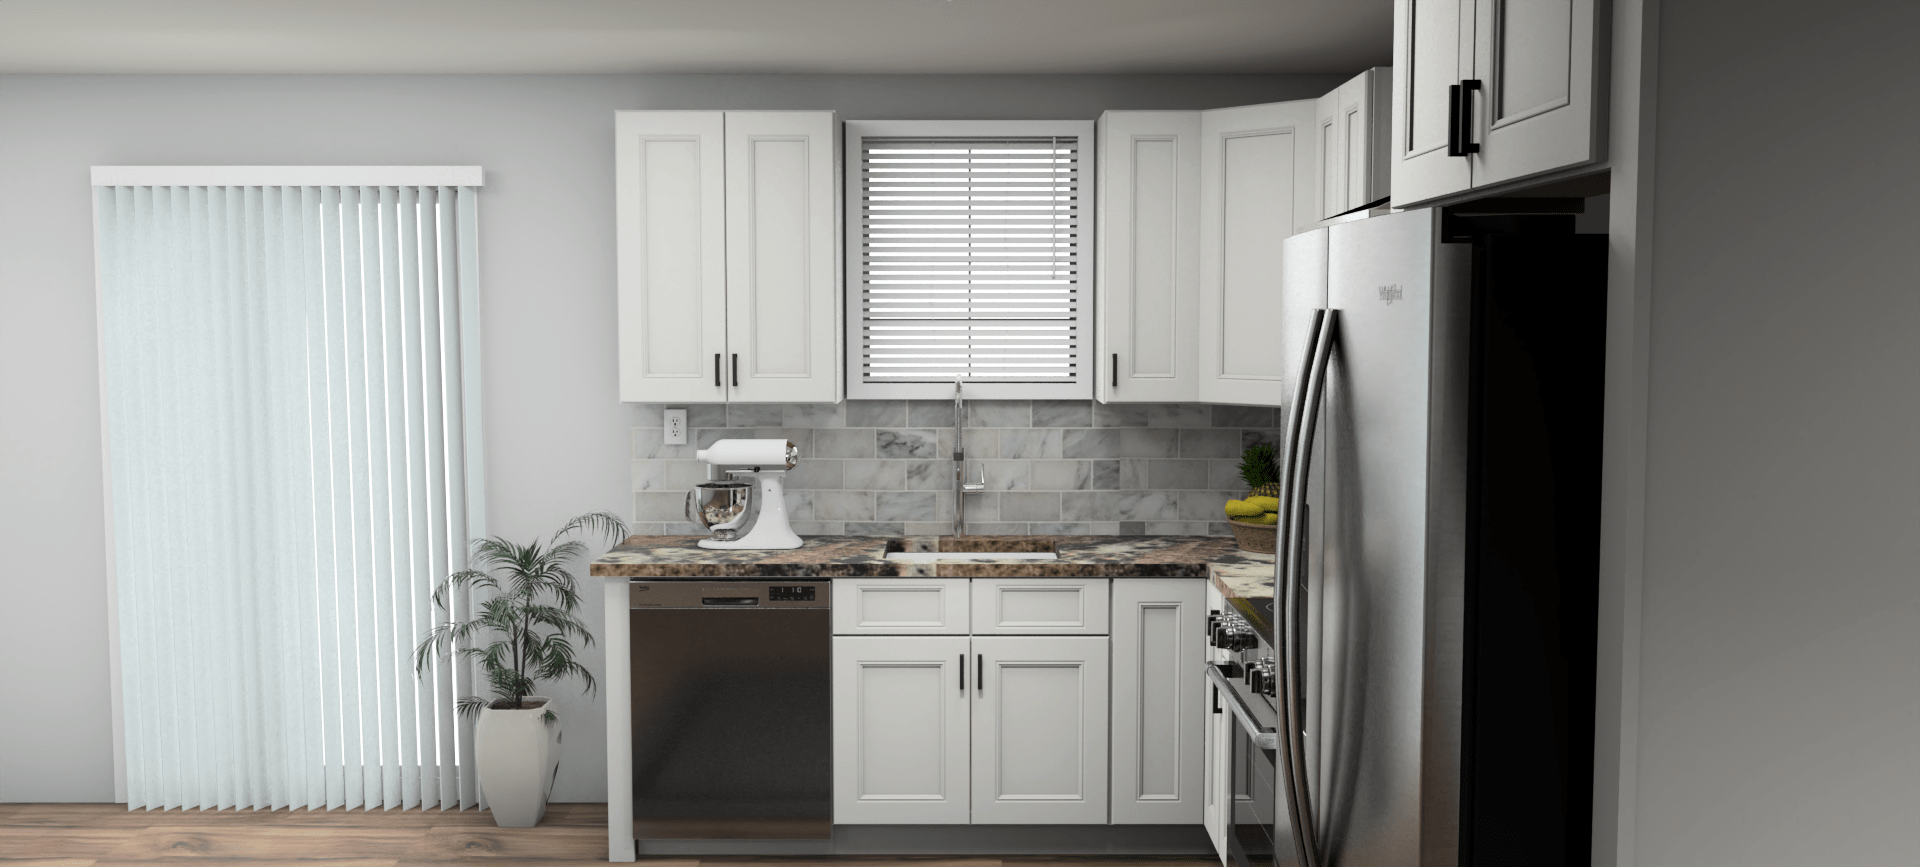 Fabuwood Allure Nexus Frost 8 x 12 L Shaped Kitchen Side Layout Photo